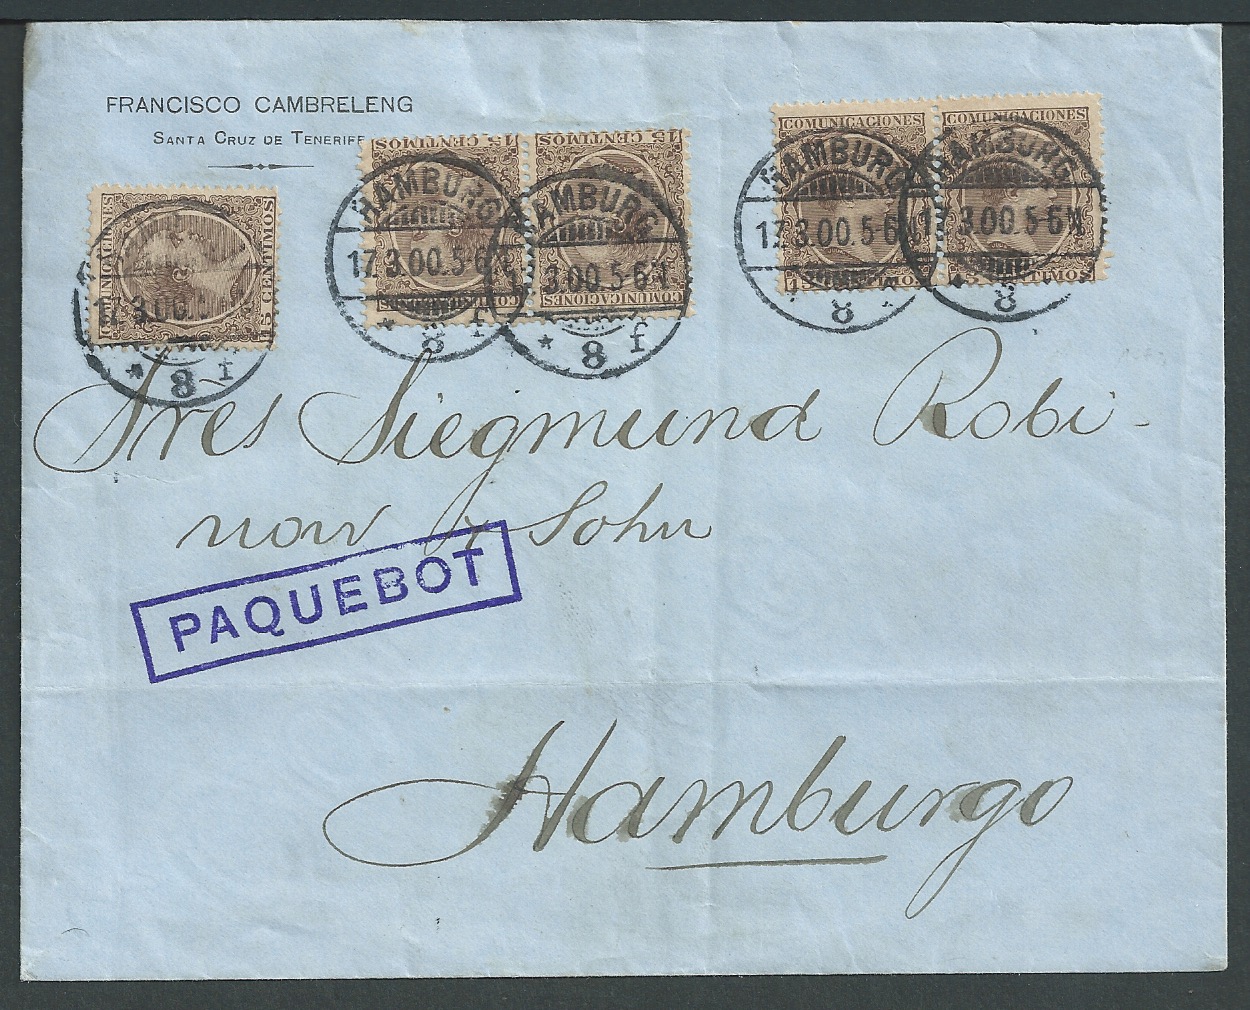 Spain / Germany 1900 Cover (light folds) from Santa Cruz de Teneriffe to Germany